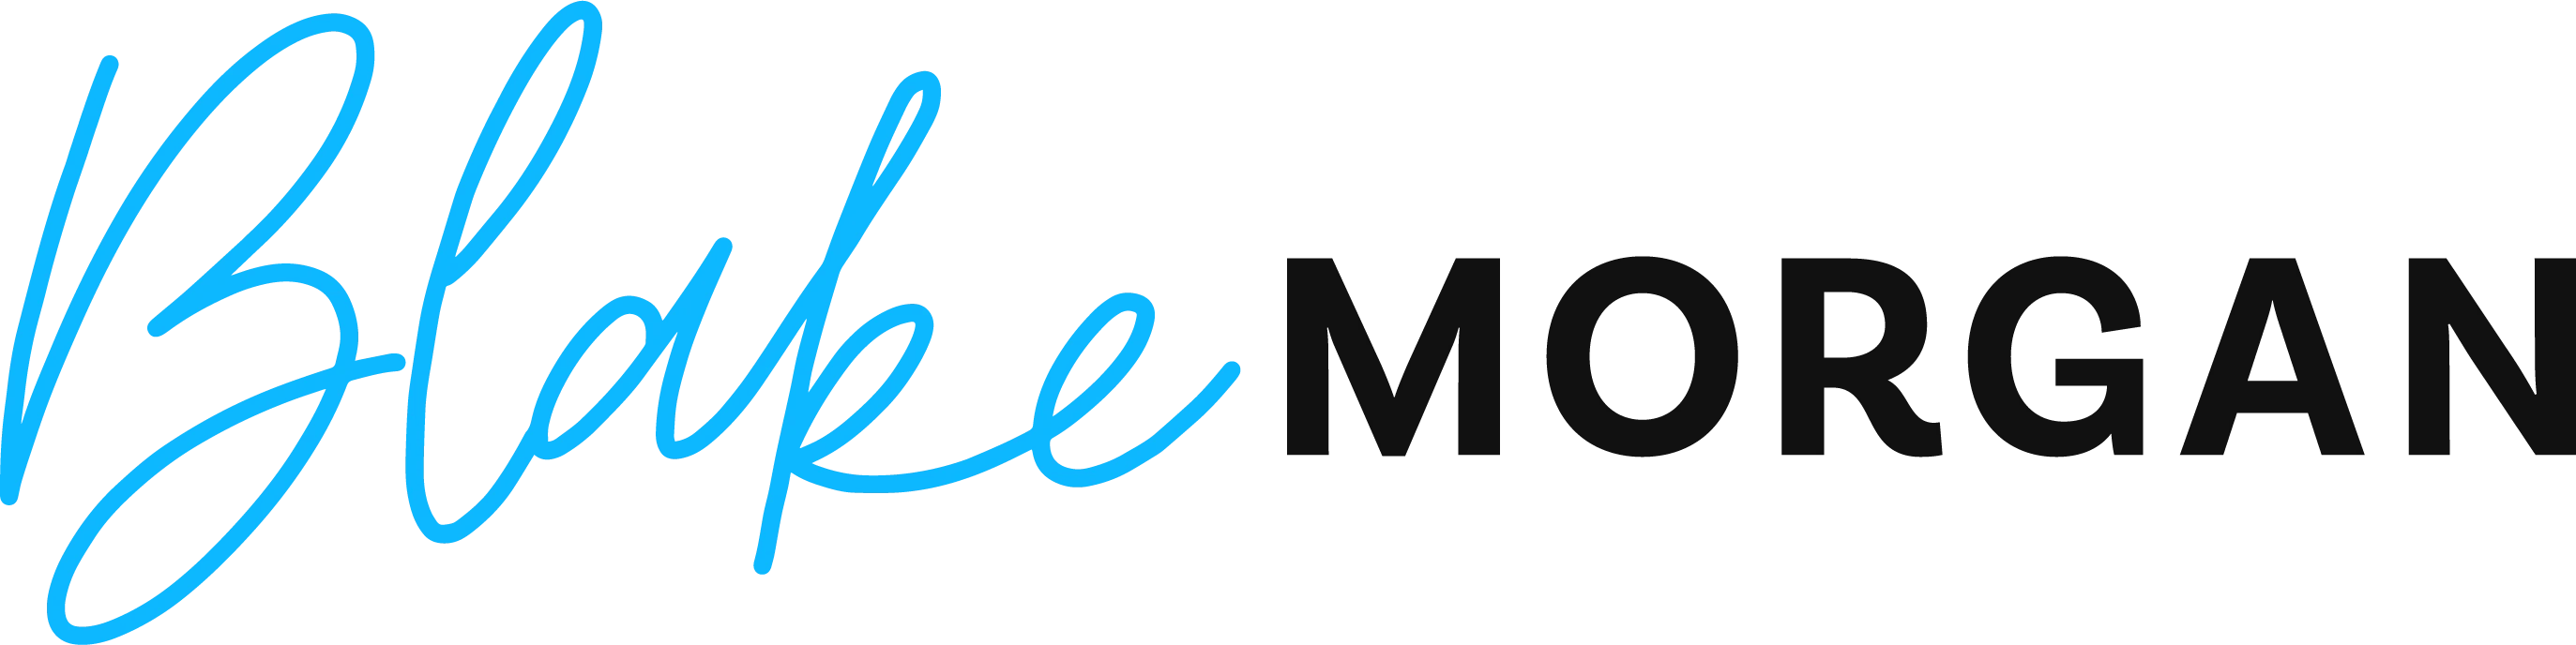 Logotipo do Blake Morgan-image